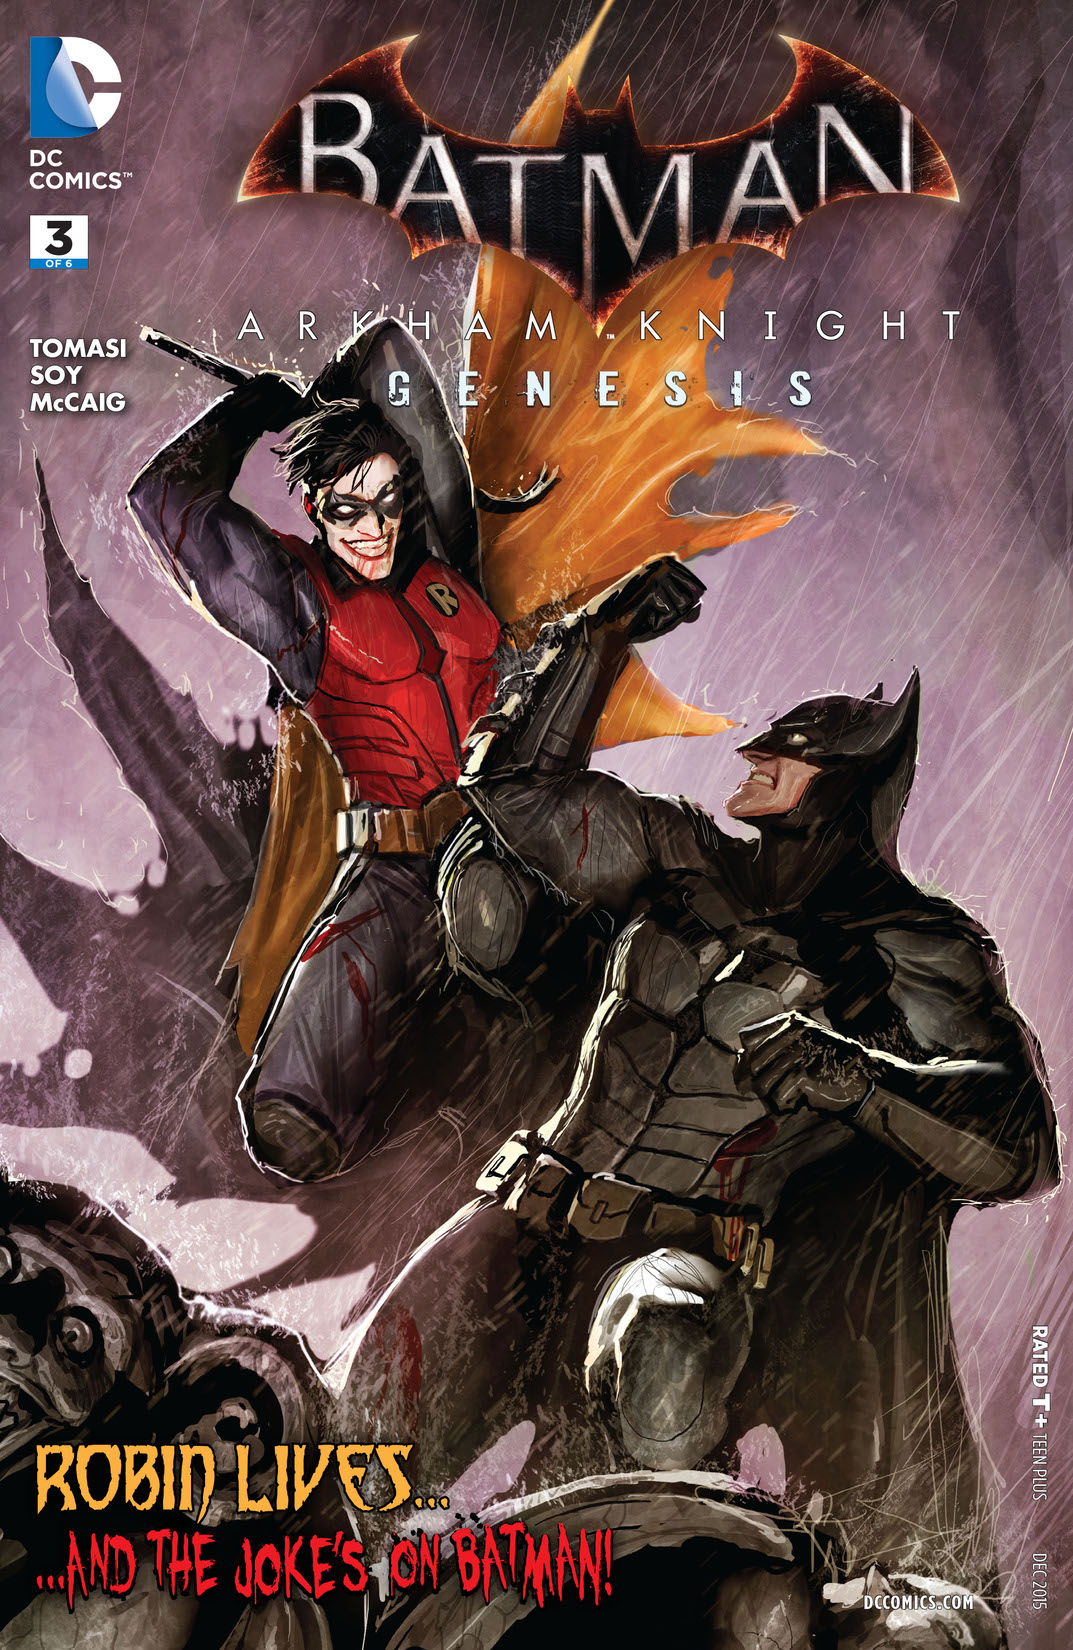 Batman: Arkham Knight Genesis #3 preview images